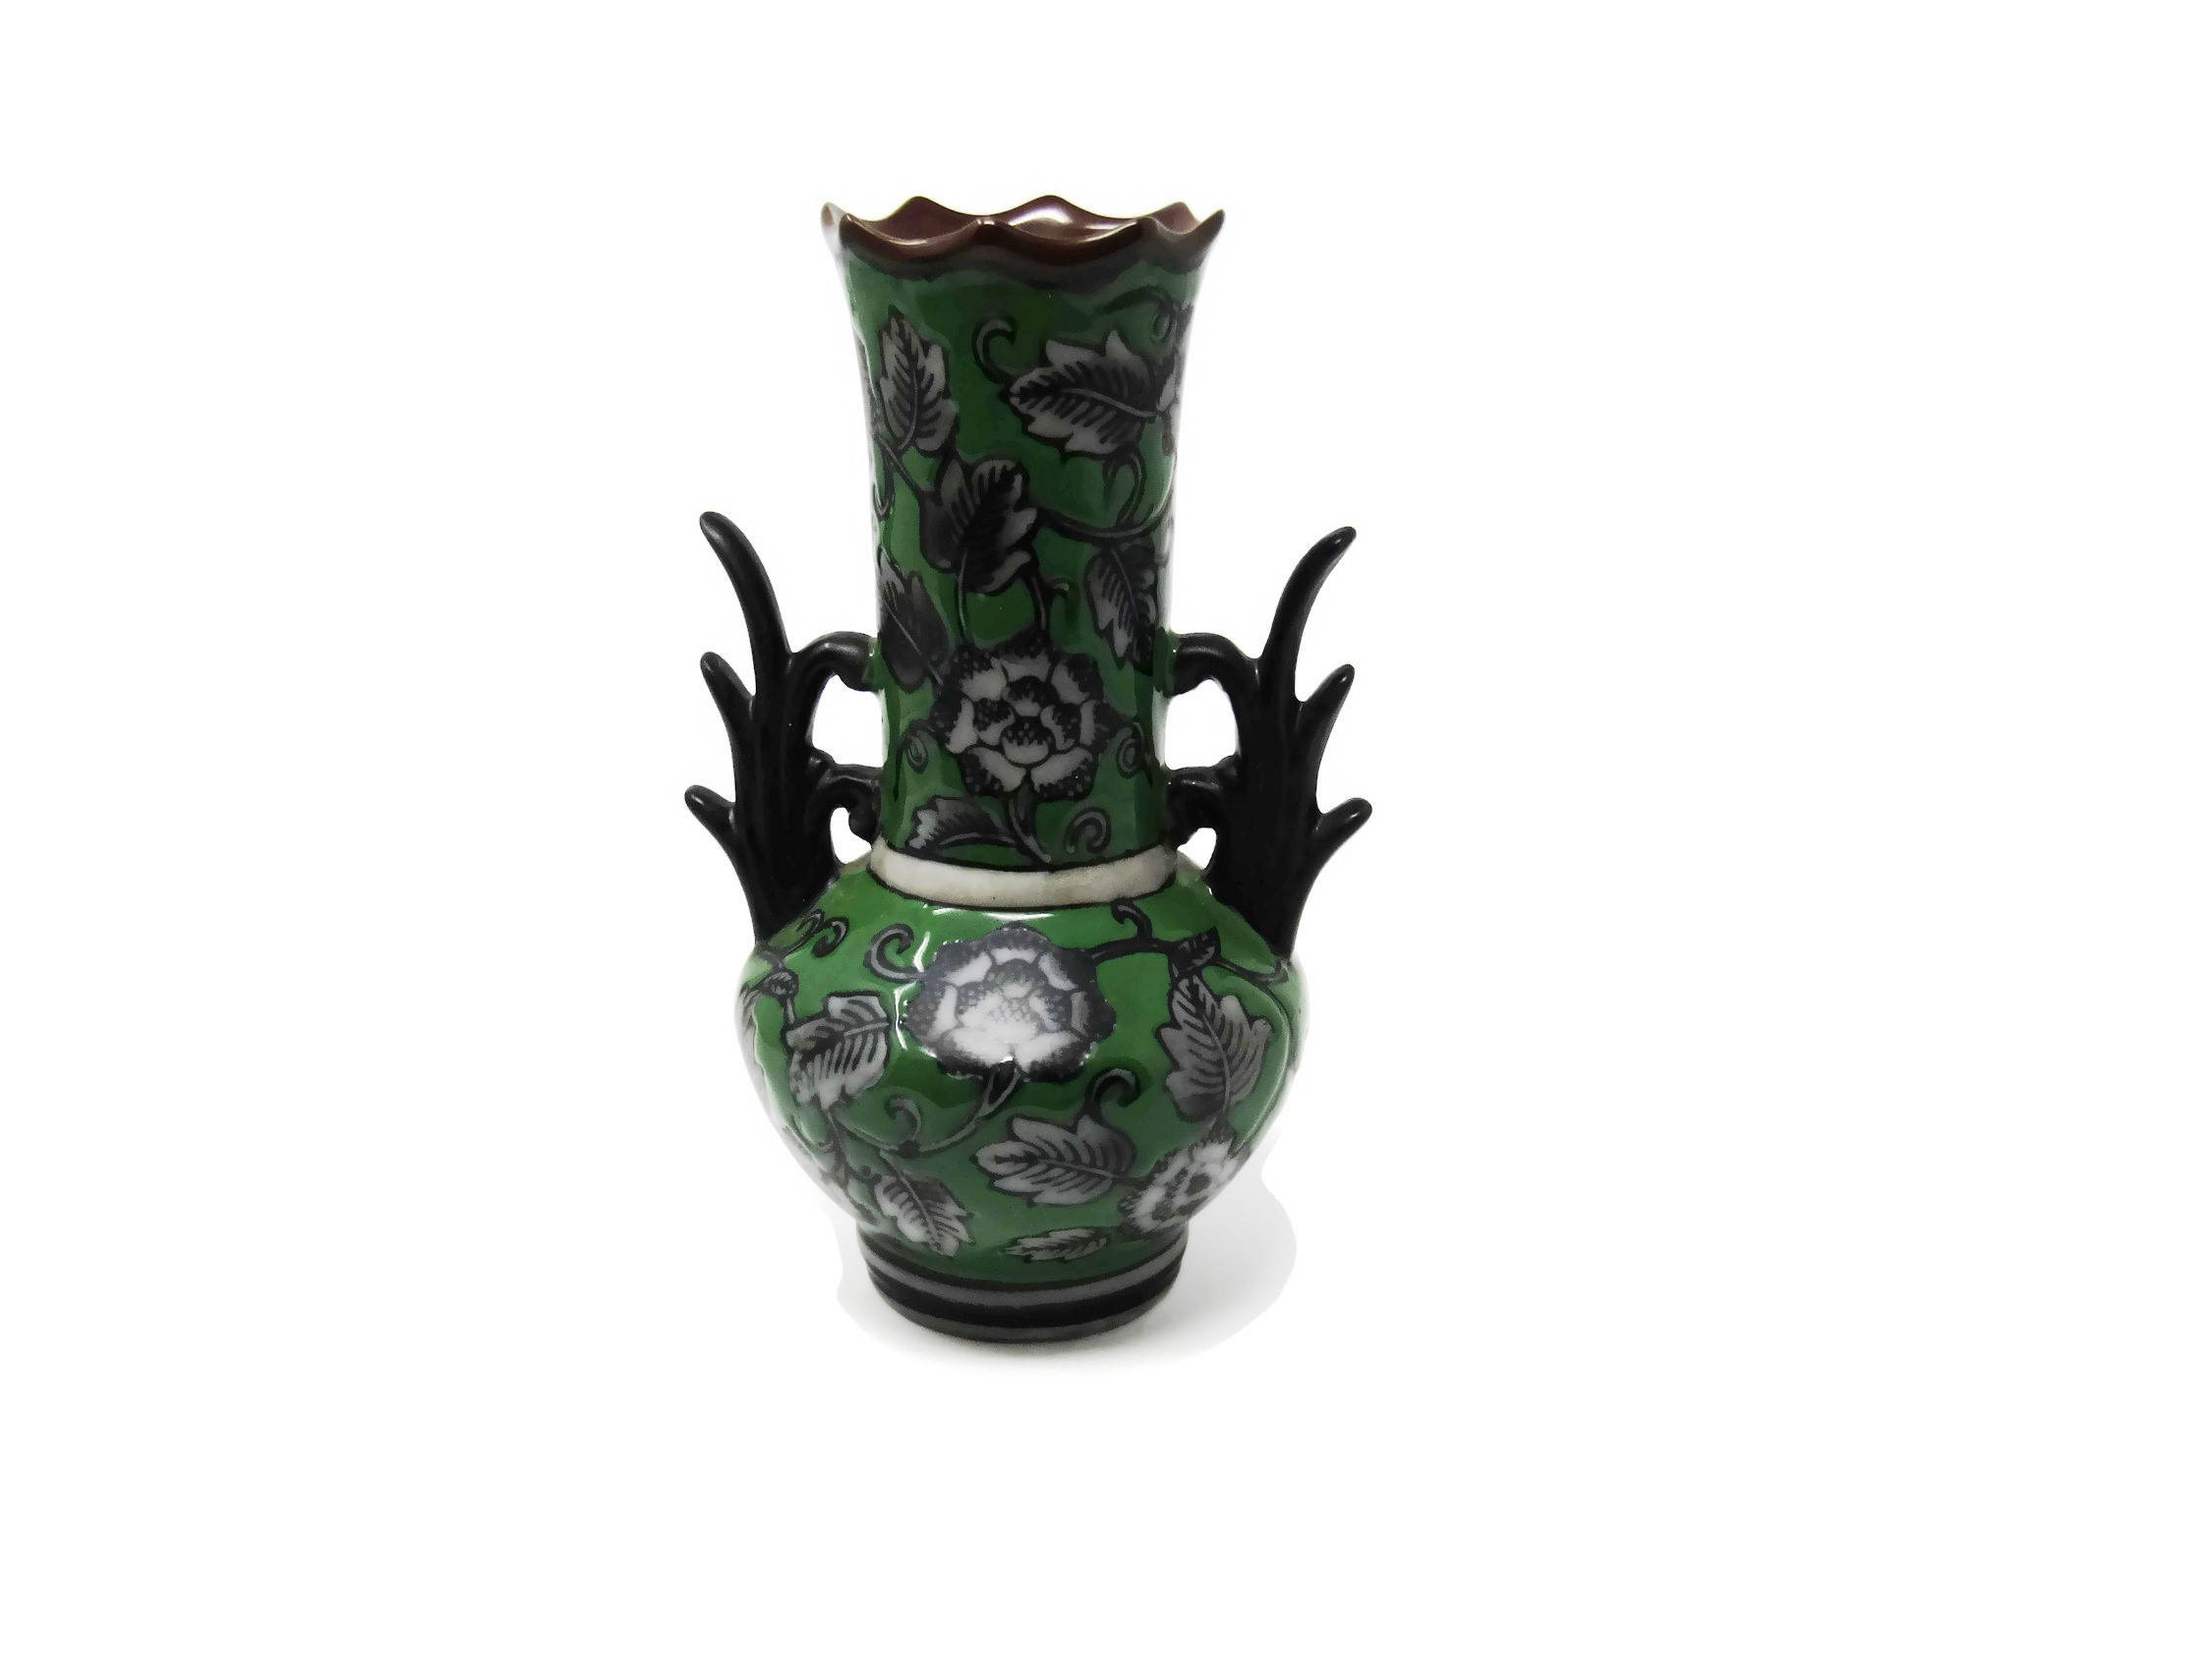 10 Lovable White Ceramic Owl Vase 2024 free download white ceramic owl vase of vintage china blue seymour mann vase green black white floral with regard to dc29fc294c28ezoom